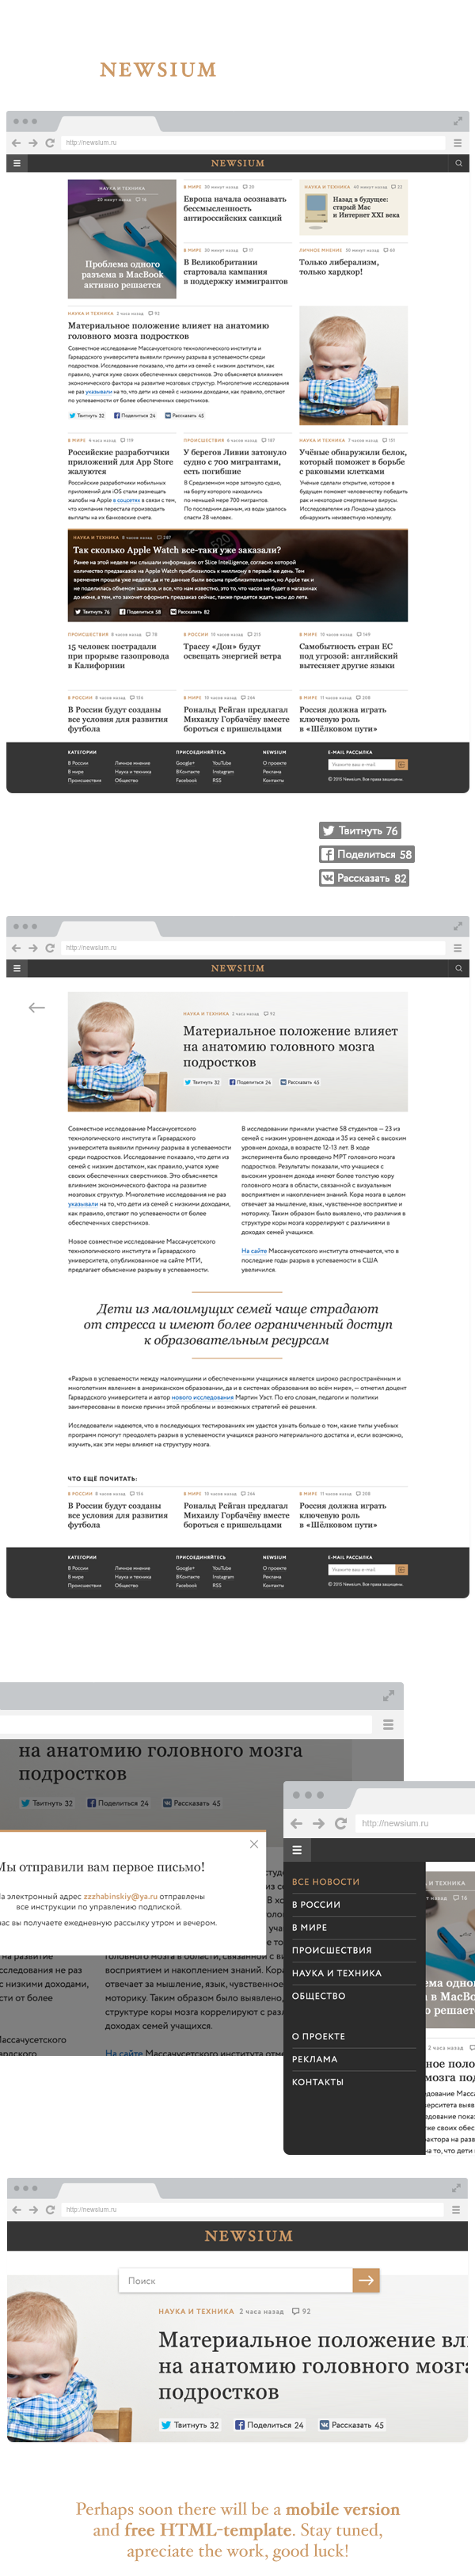 Web ux UI concept news magazine template